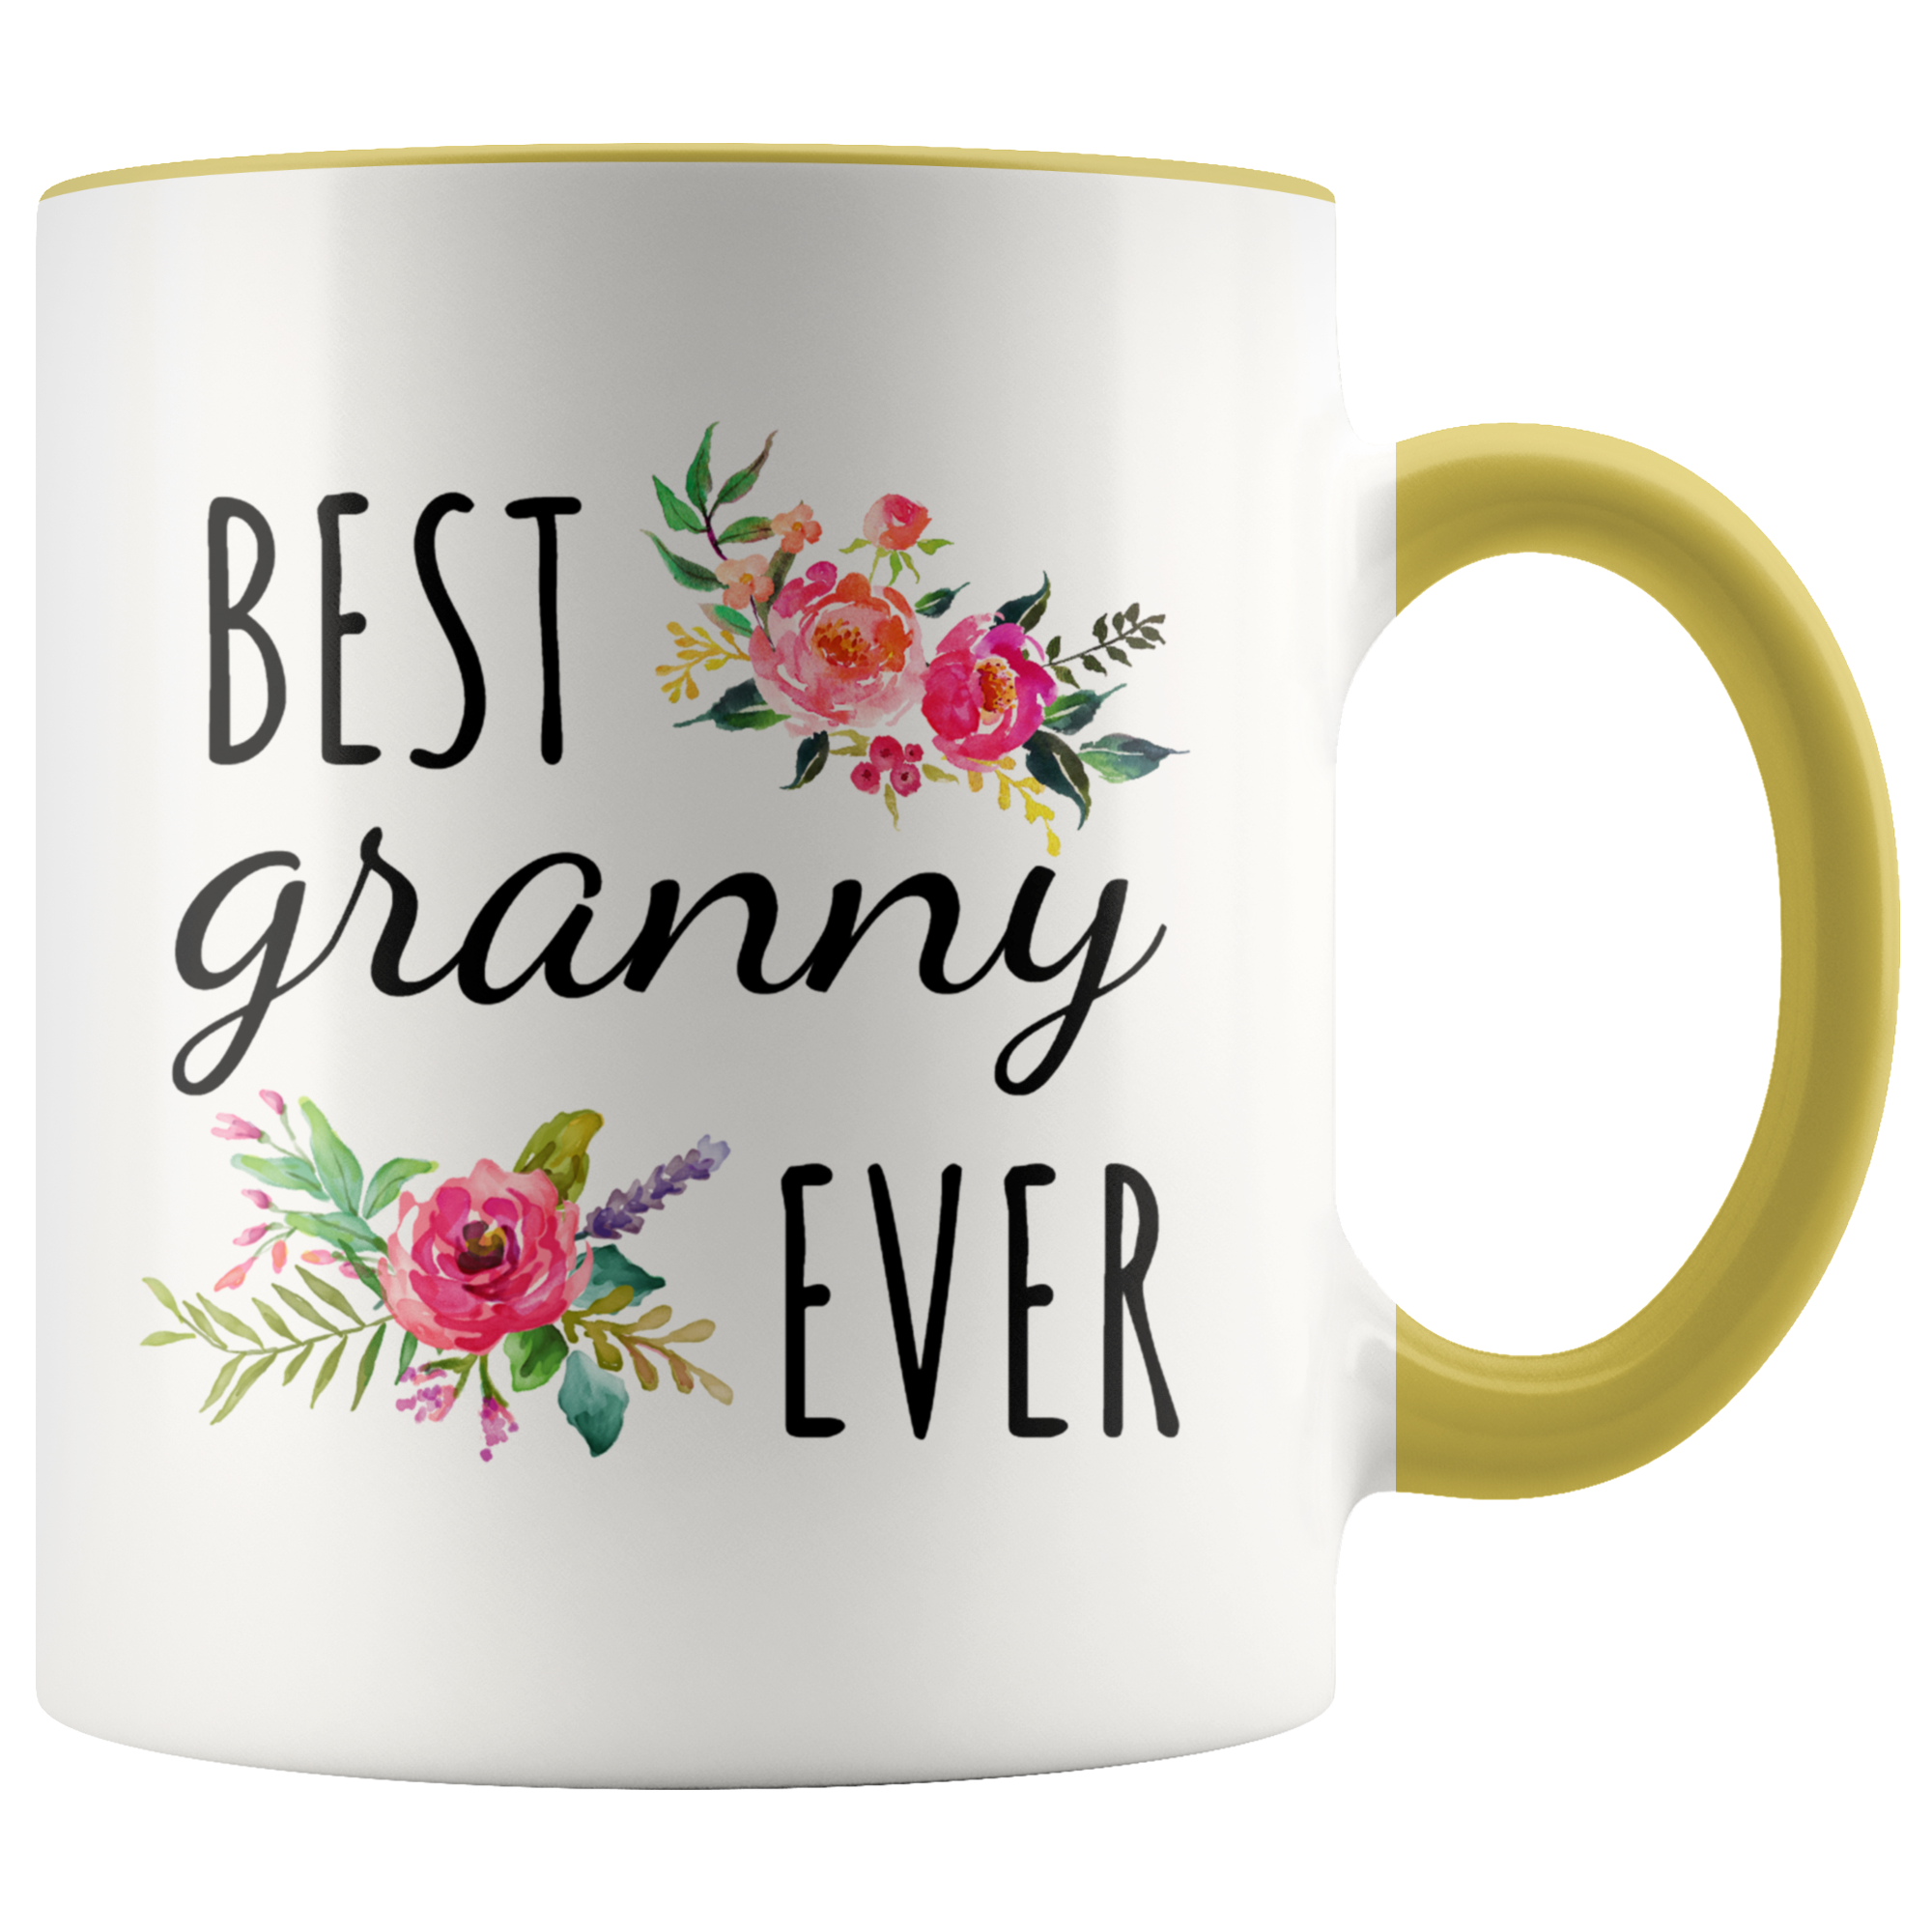 Best Granny Mug